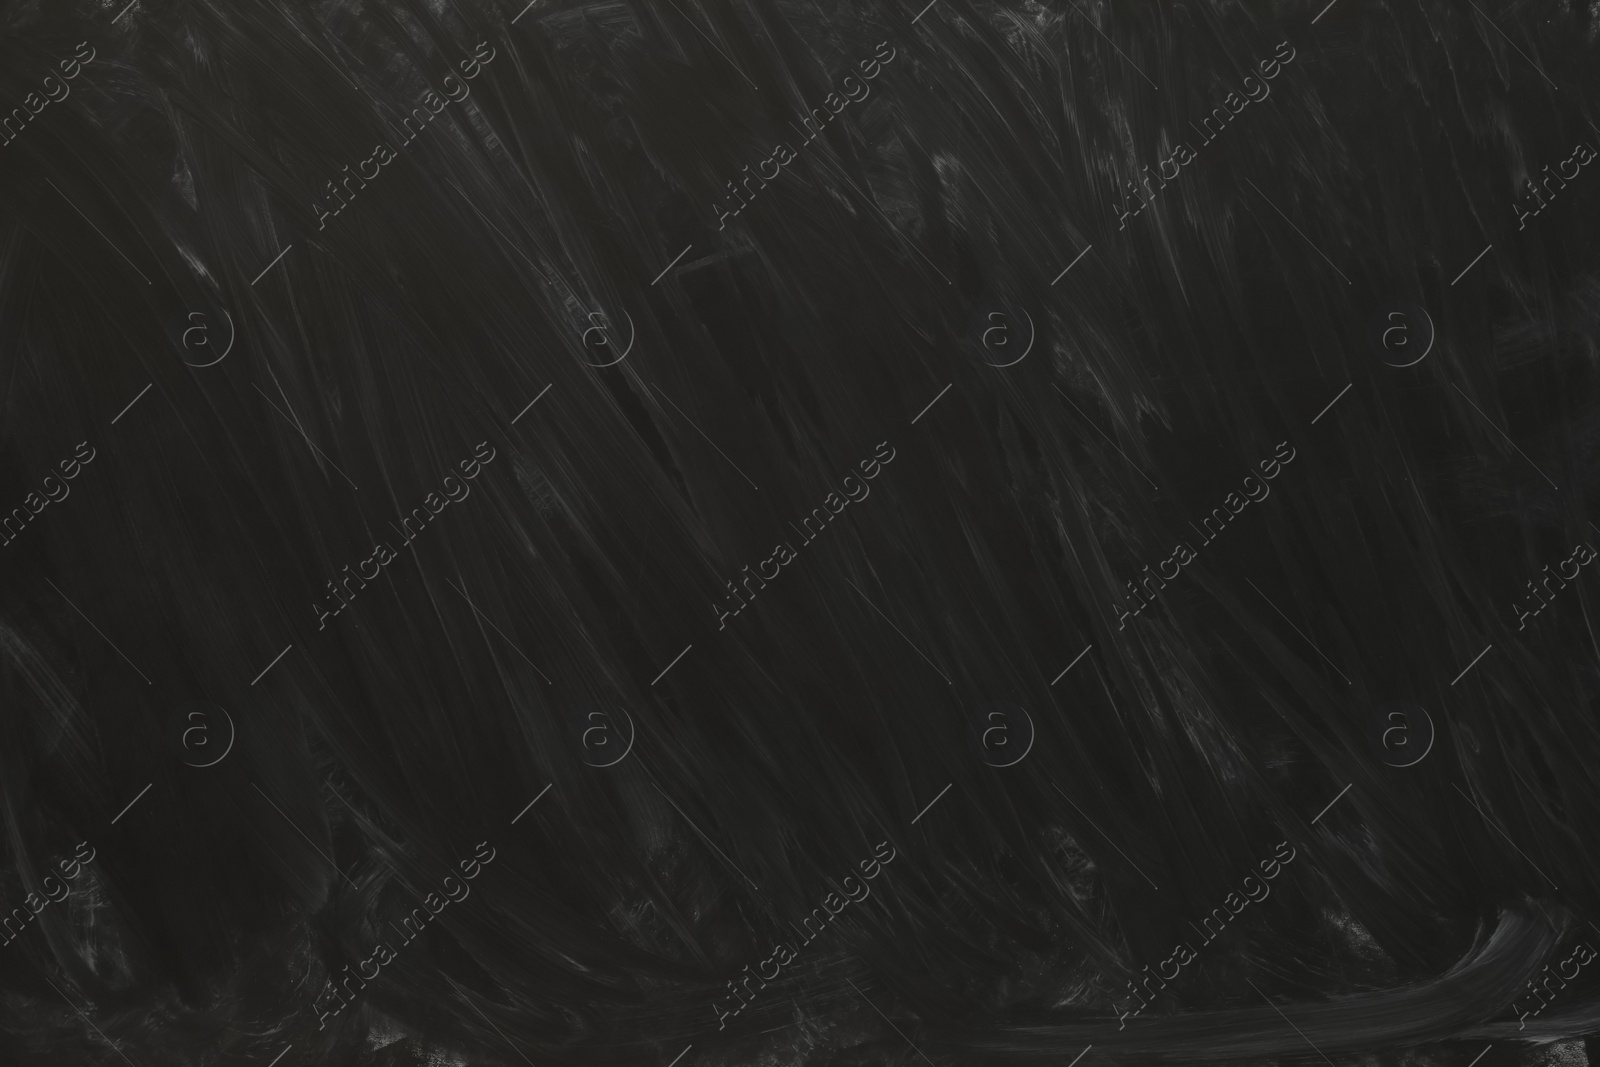 Photo of Dirty black chalkboard as background. School equipment